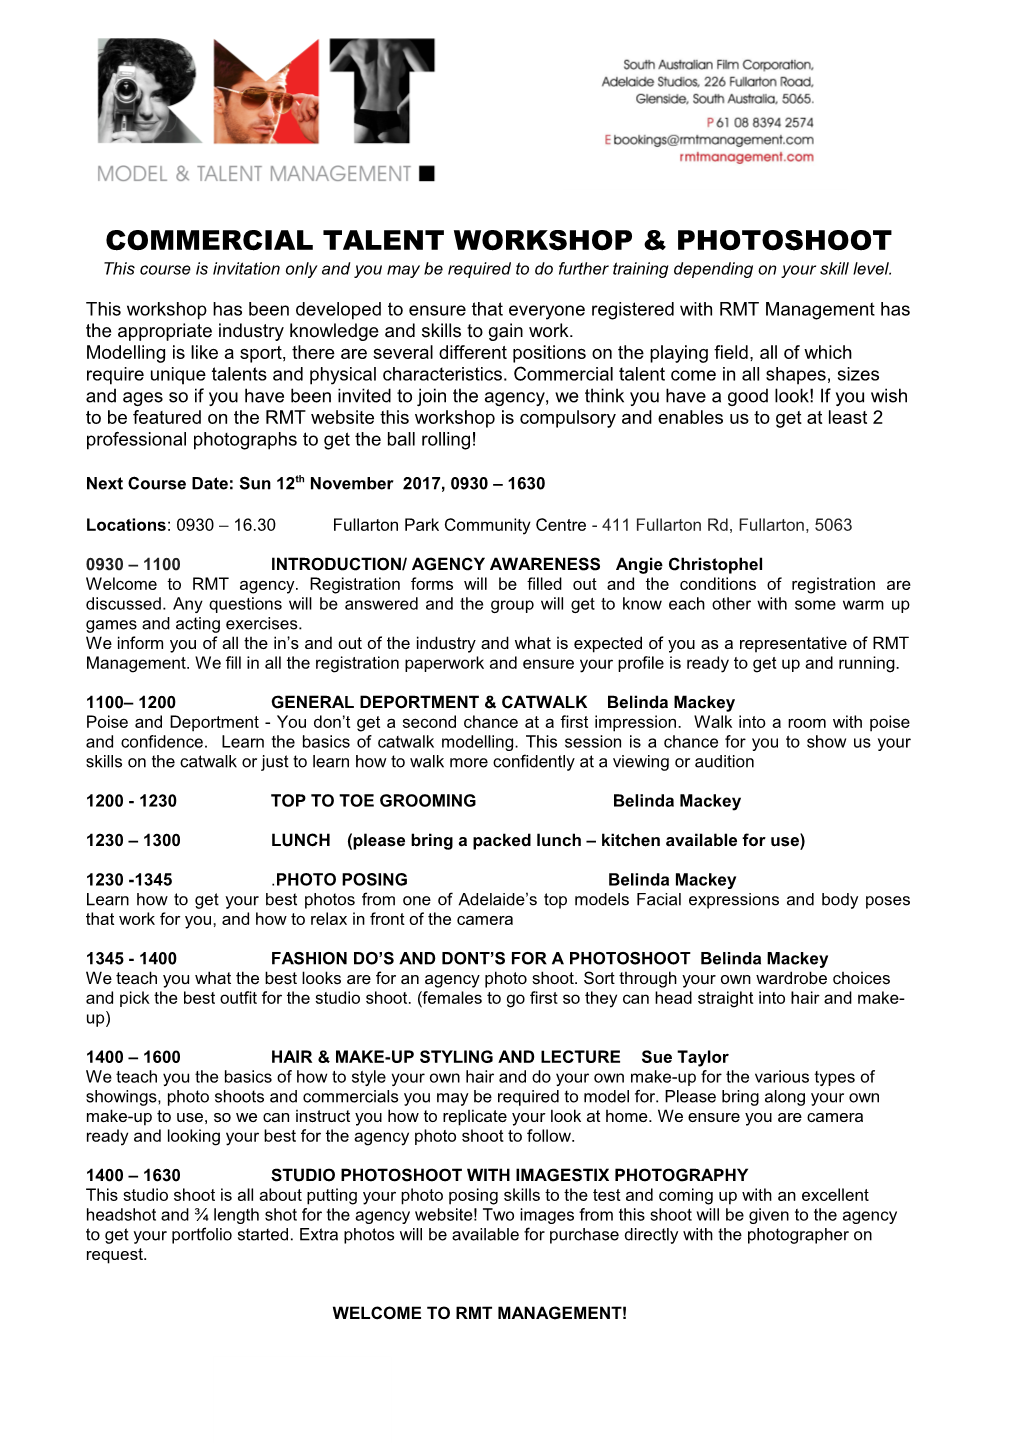 Commercial Talent Workshop & Photoshoot